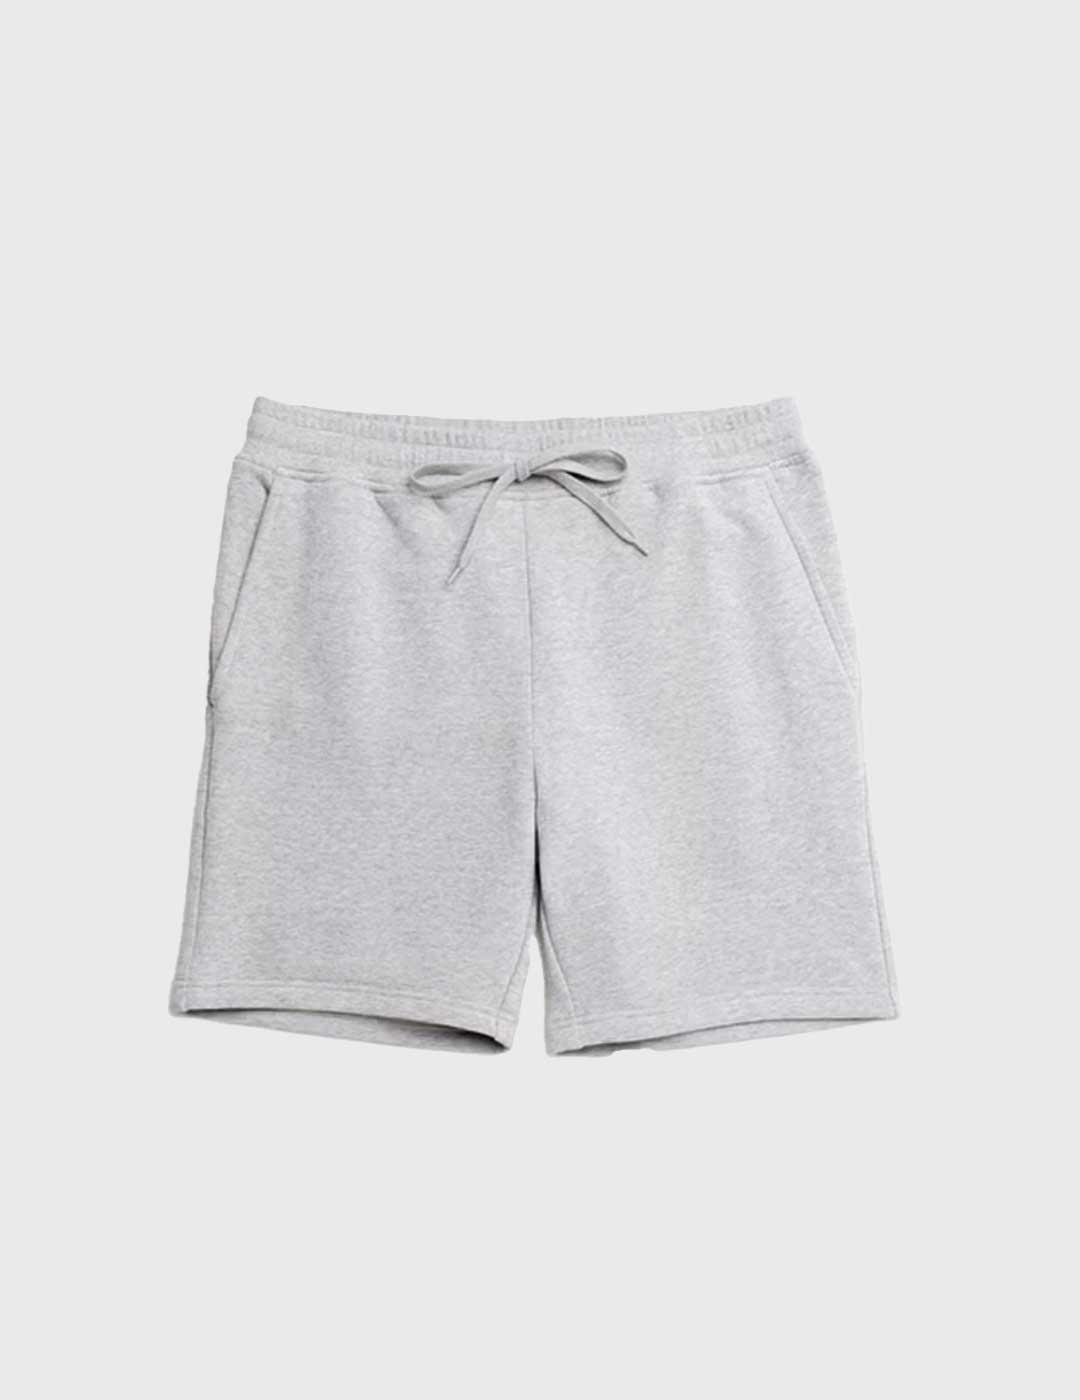 Herschel Classic Sweatshort Pantalón corto gris de hombre